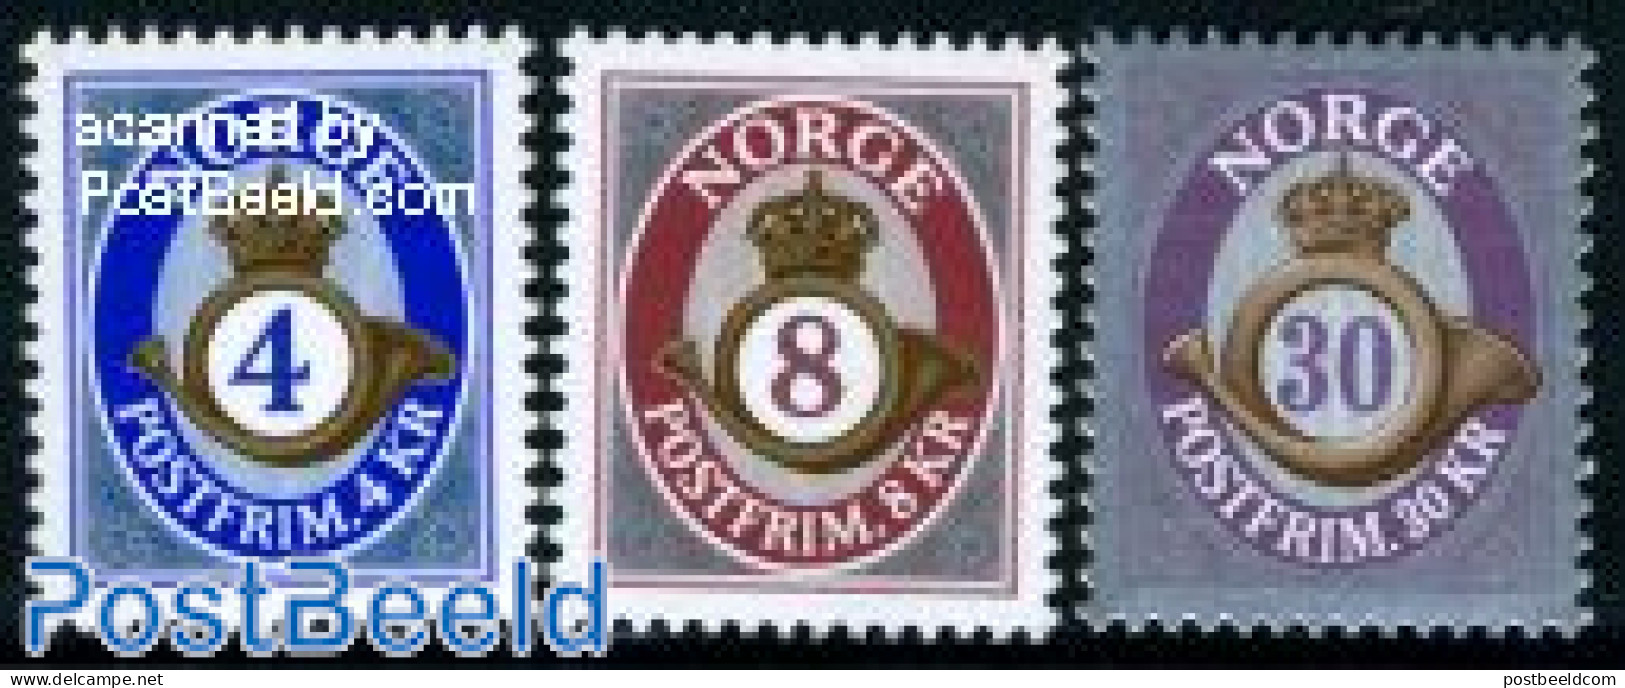 Norway 2010 Definitives 3v, Mint NH - Ungebraucht